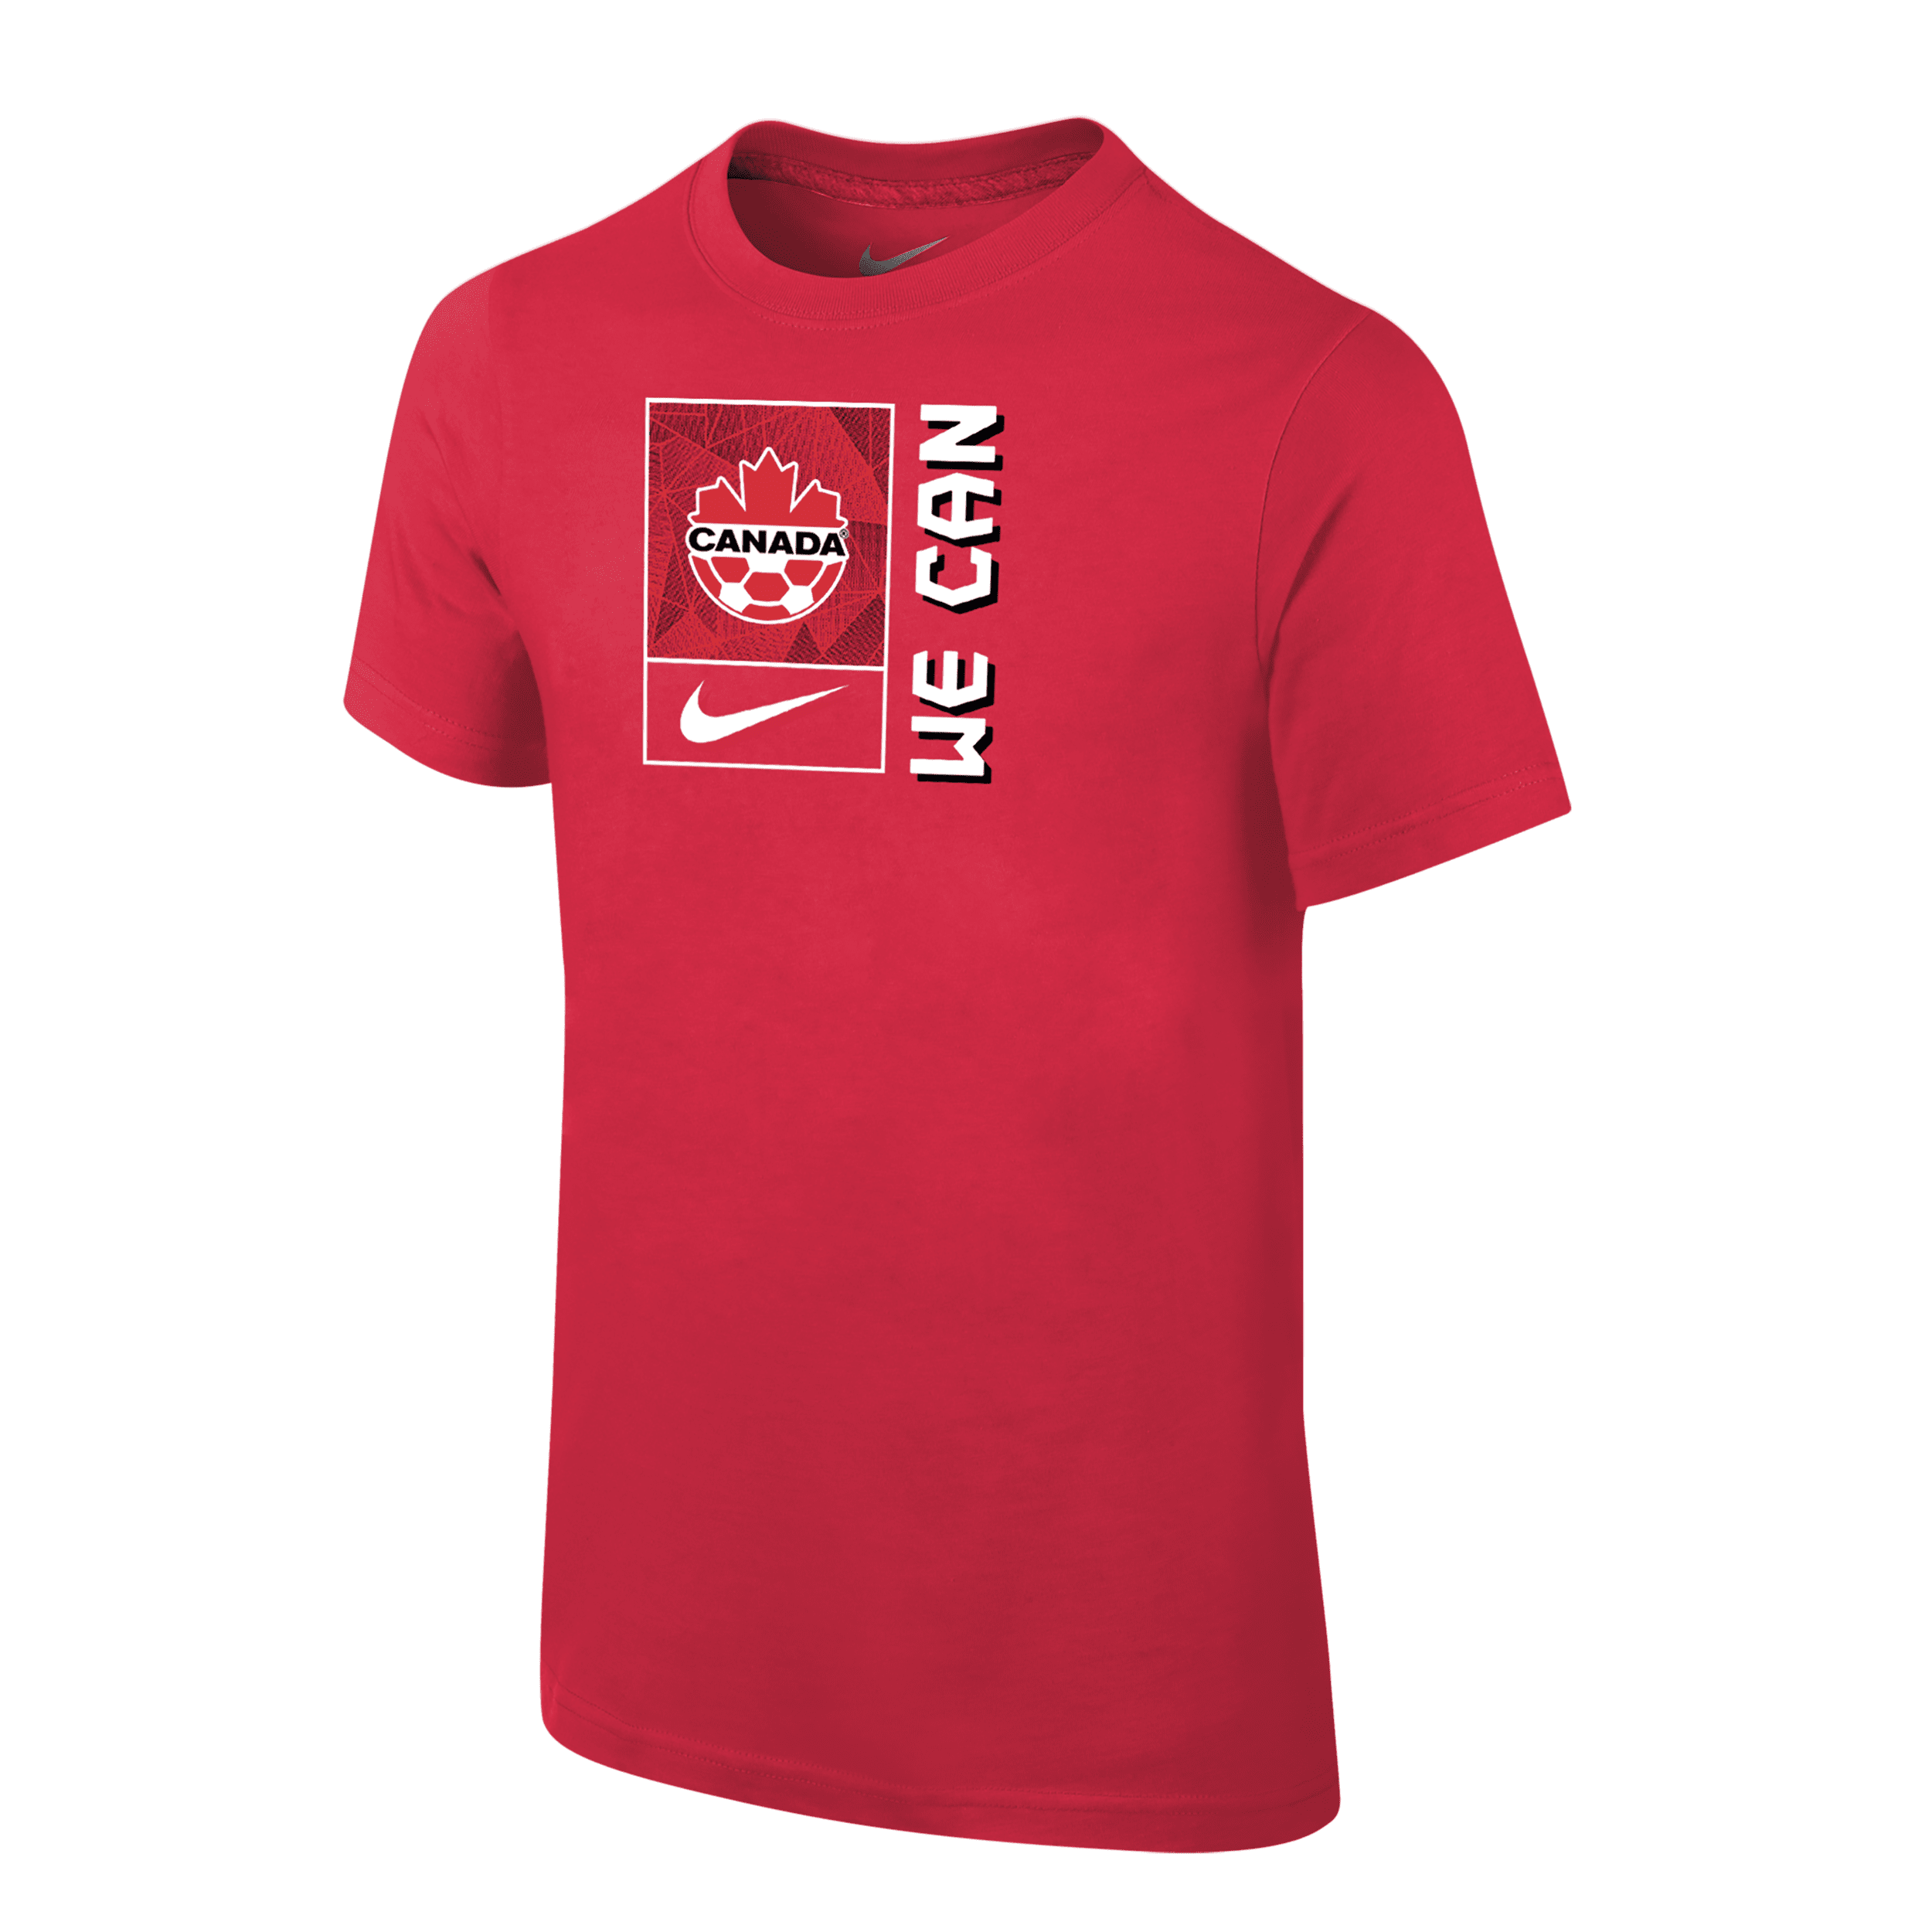 Nike Canada Big Kids' (boys')  Soccer T-shirt In Red